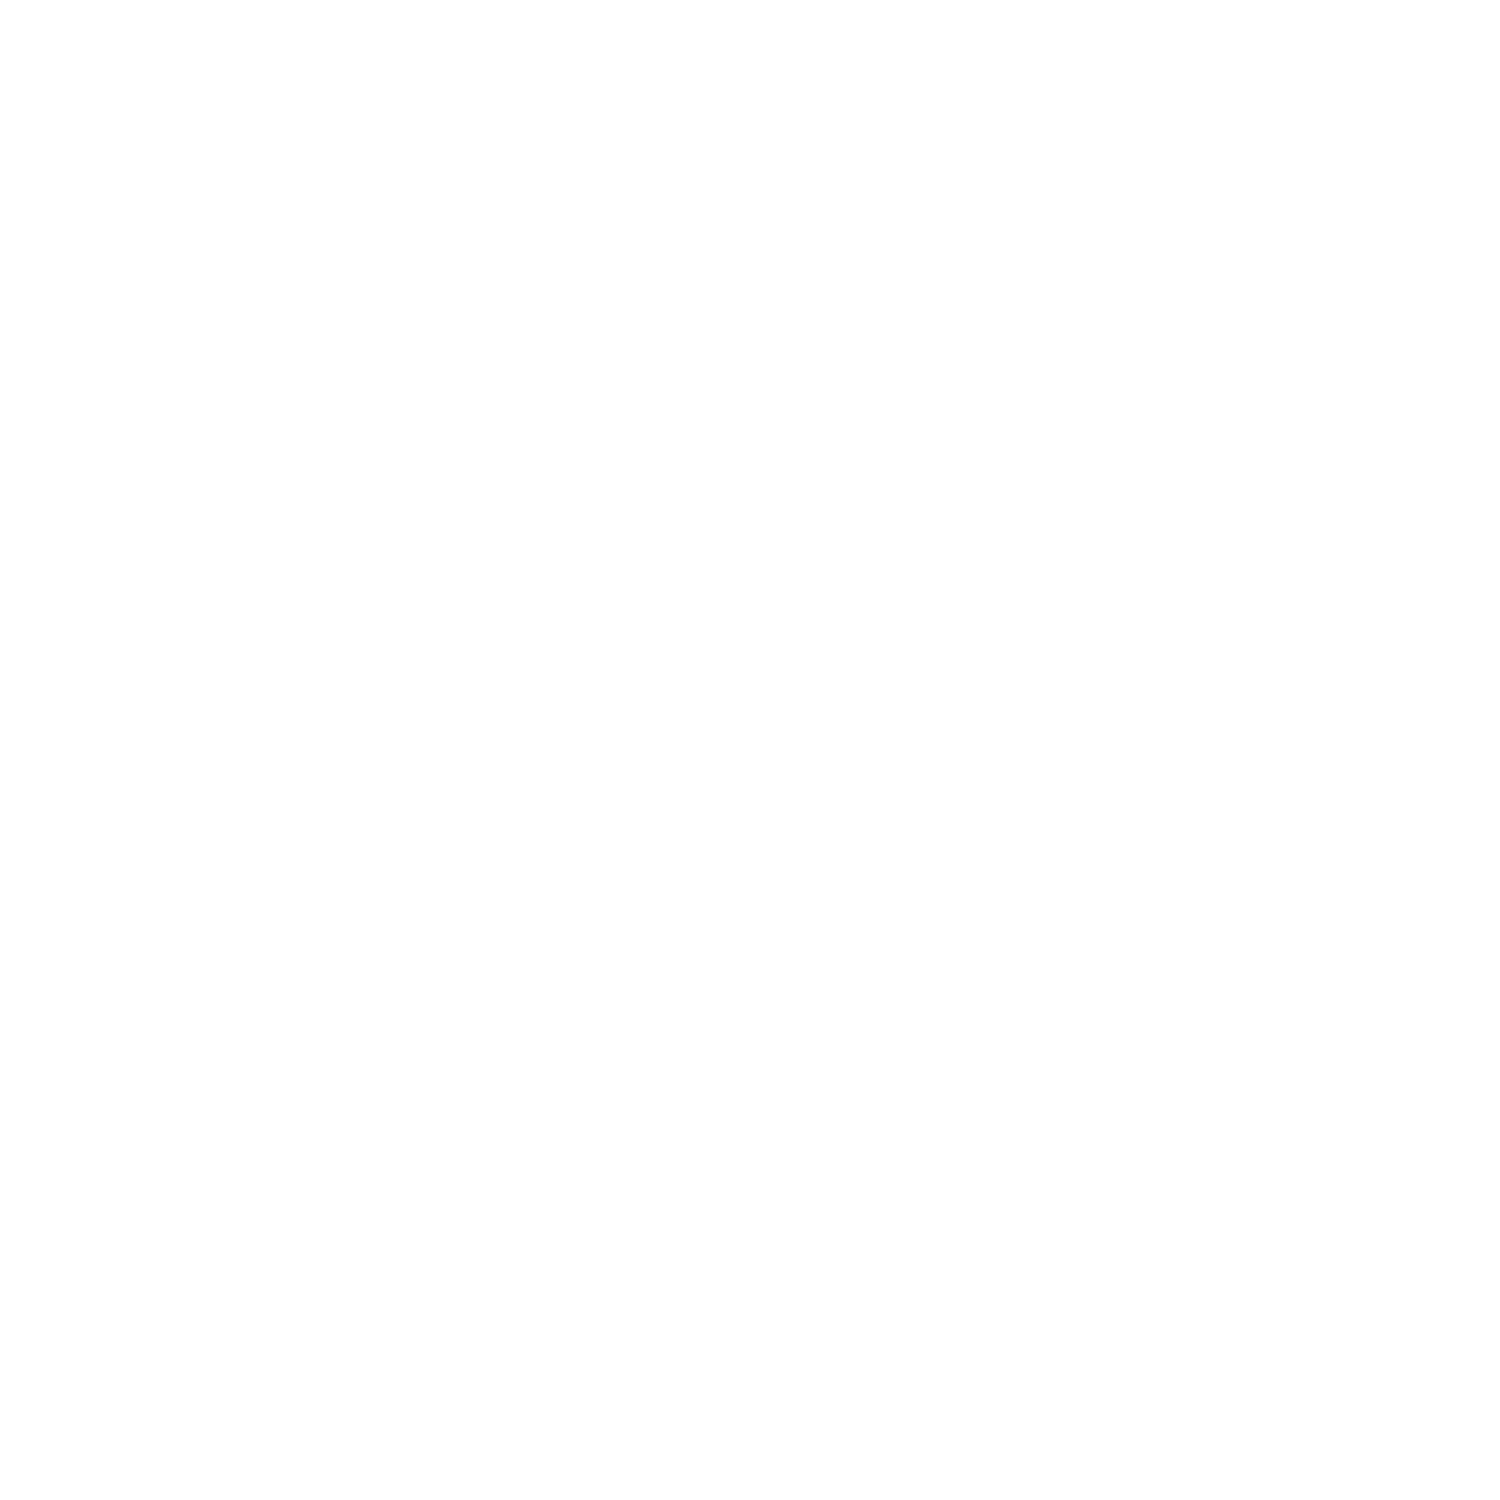 Common Kings